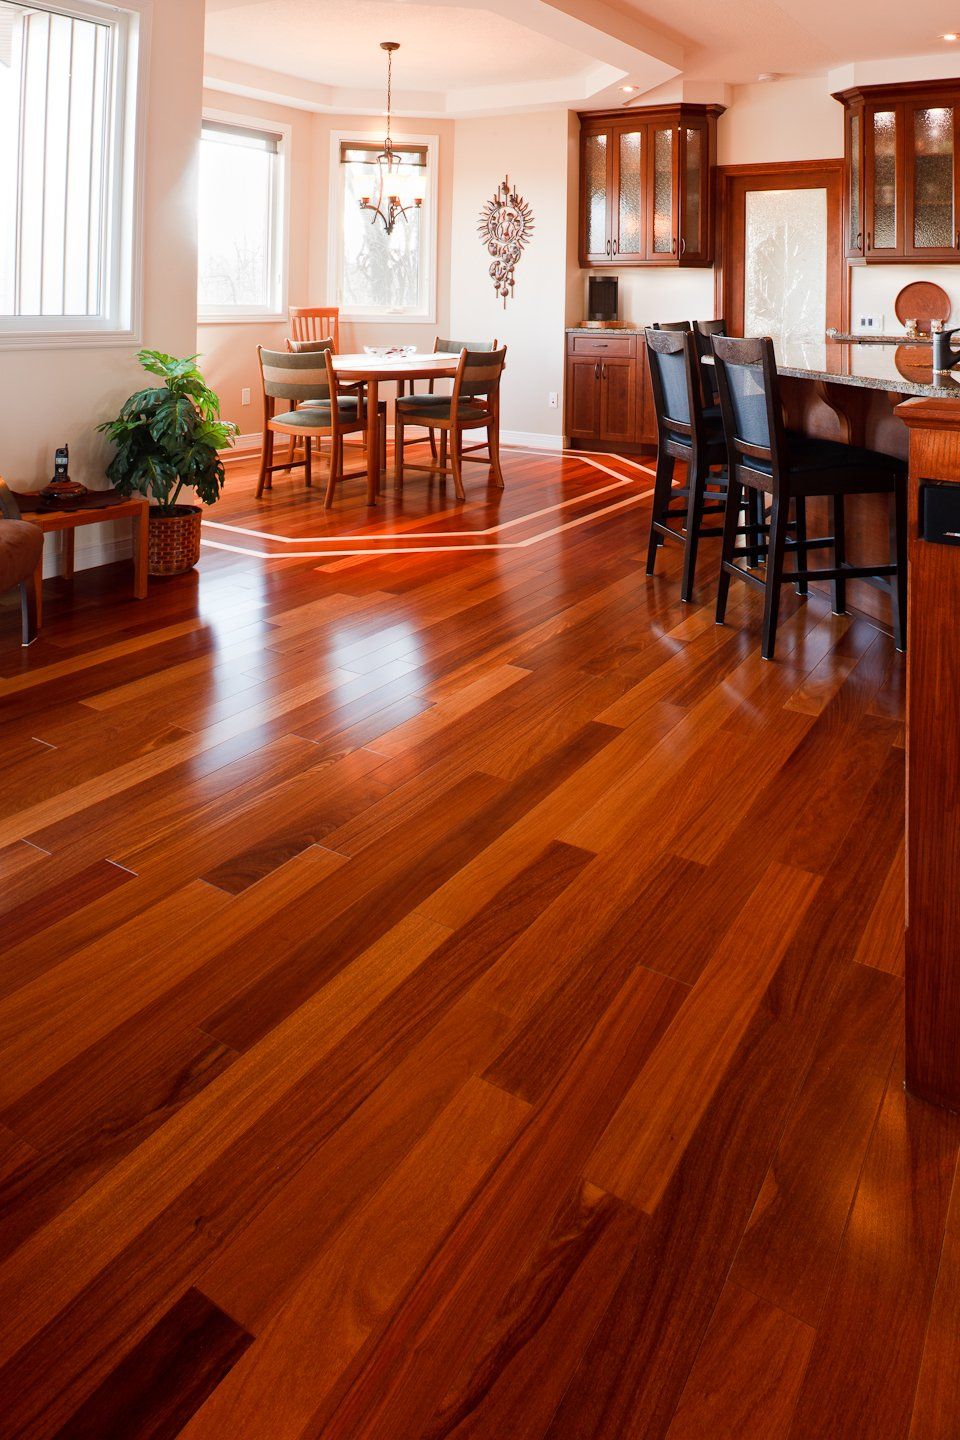 Variety of choices: hardwood flooring
types